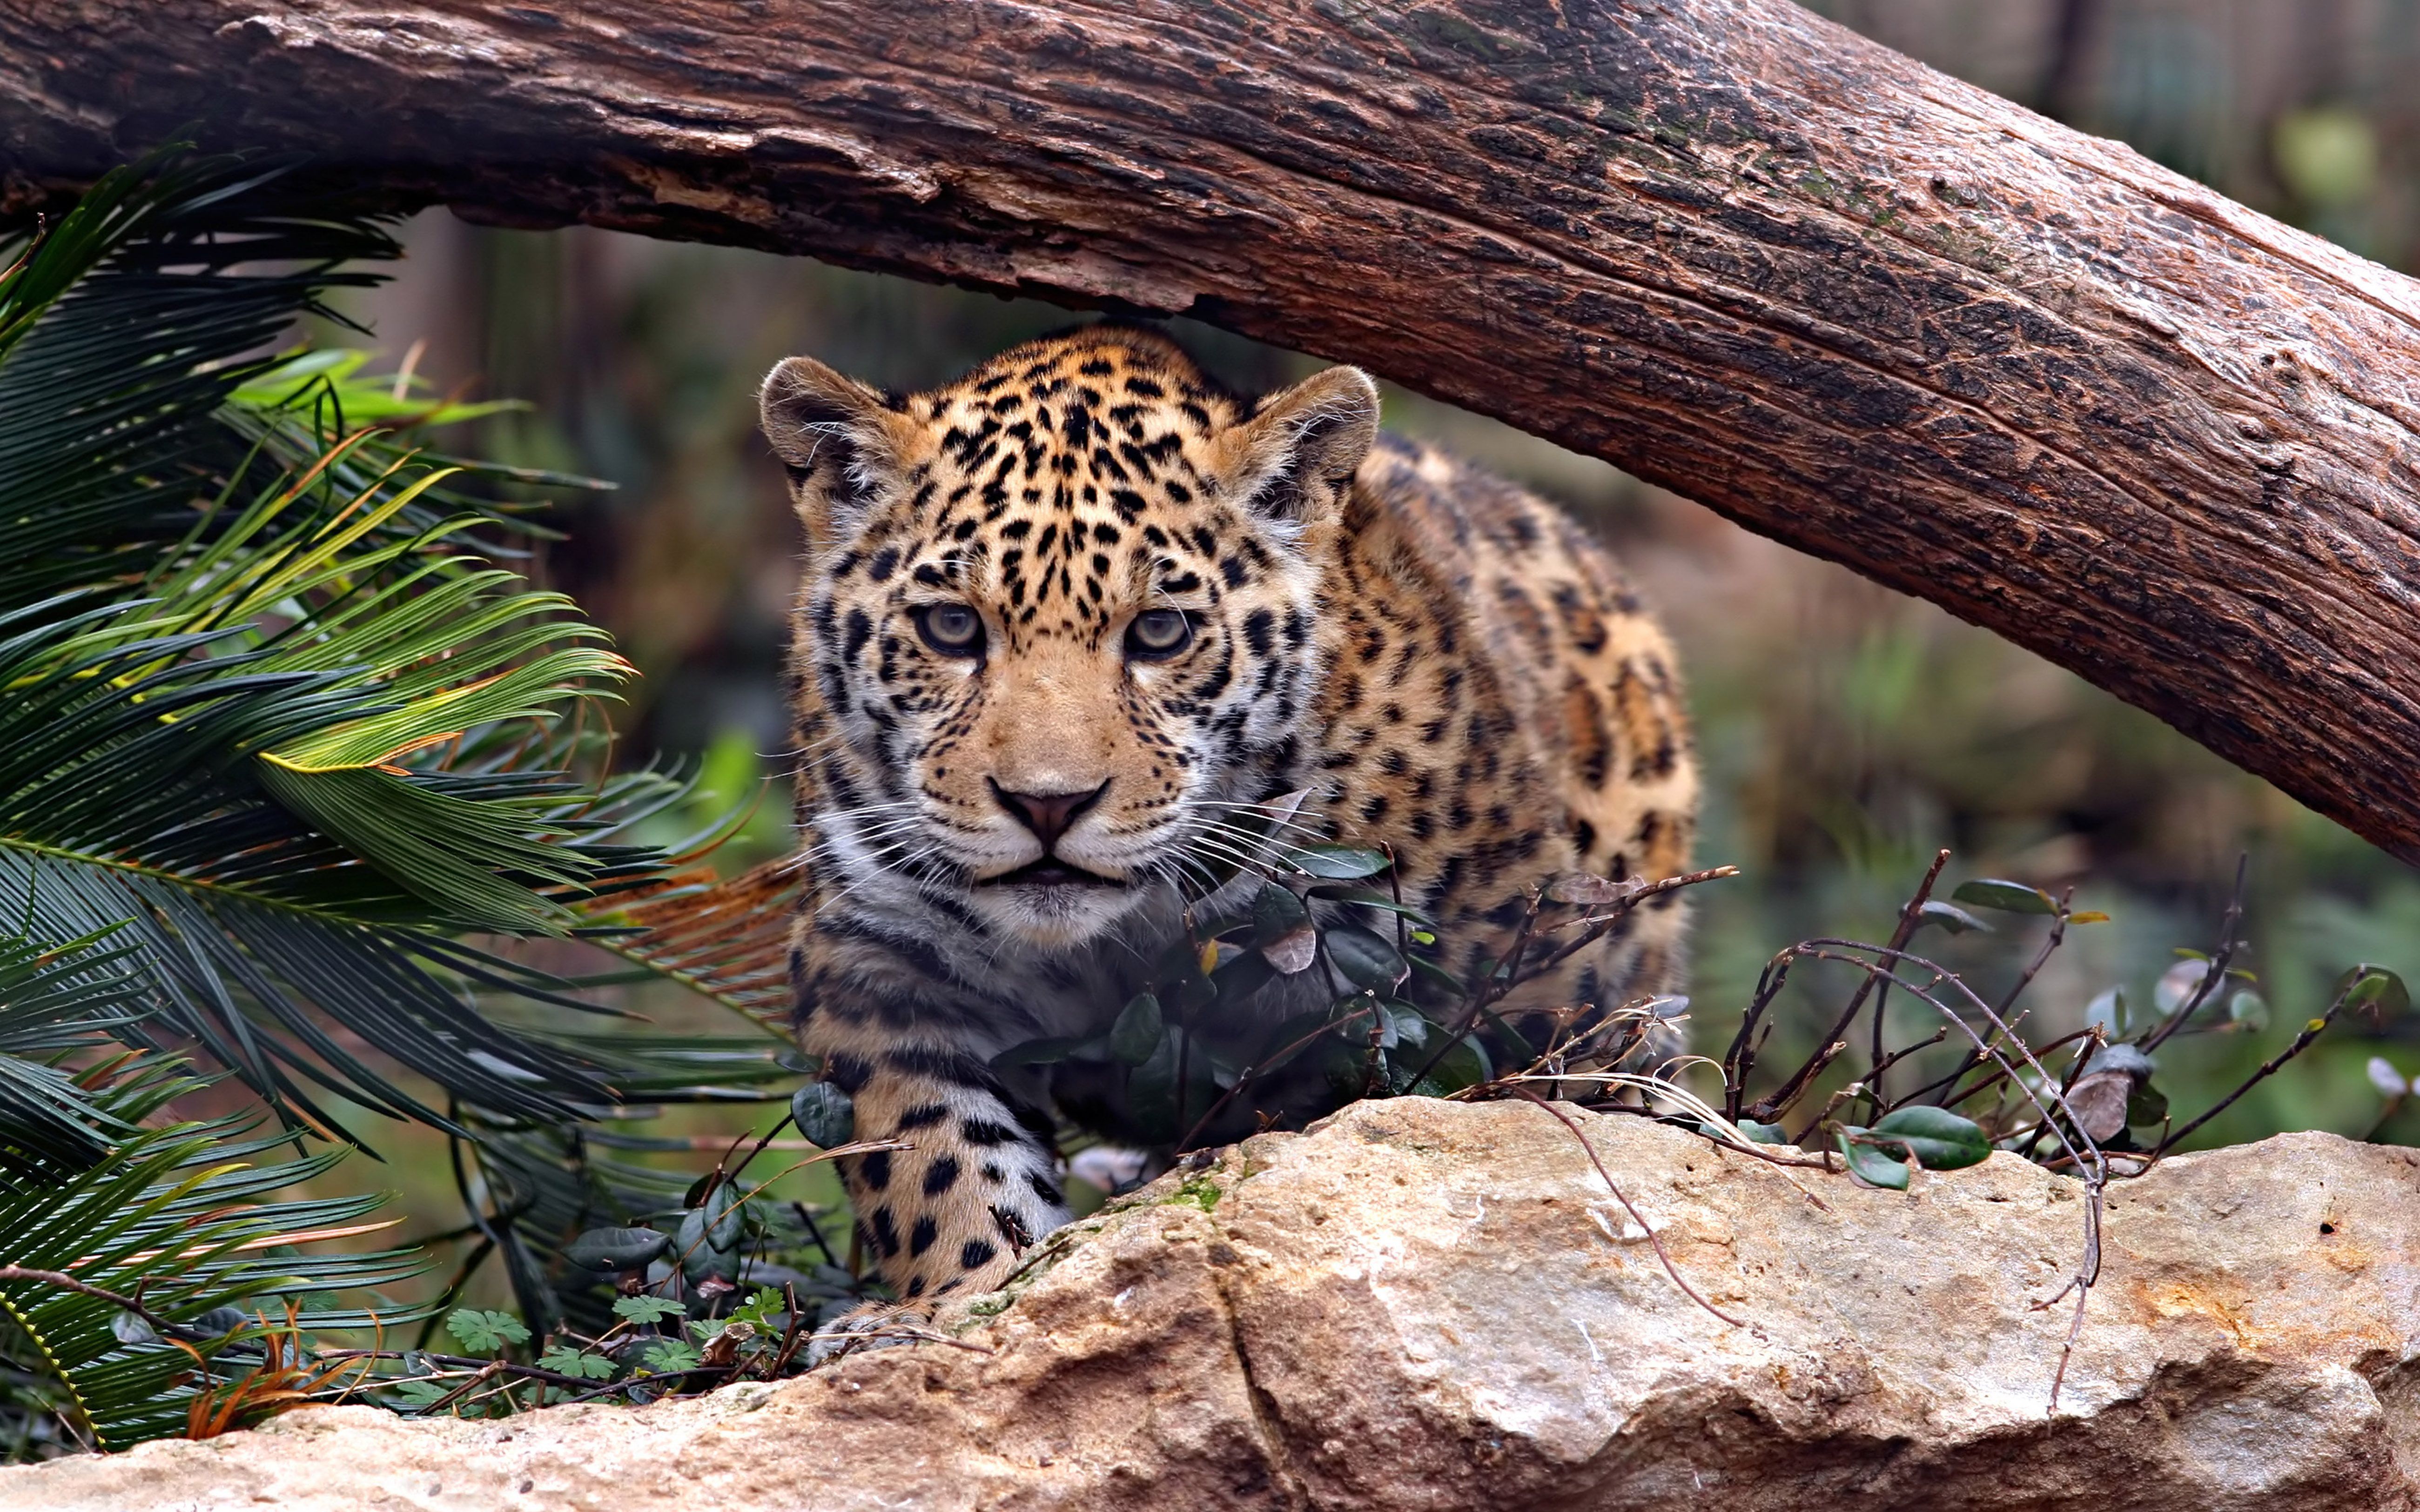 Animals Jaguar Predator Wild Cat Uhd 4k Wallpaper For Desktop Mobile Phones 5200x3250, Wallpaper13.com